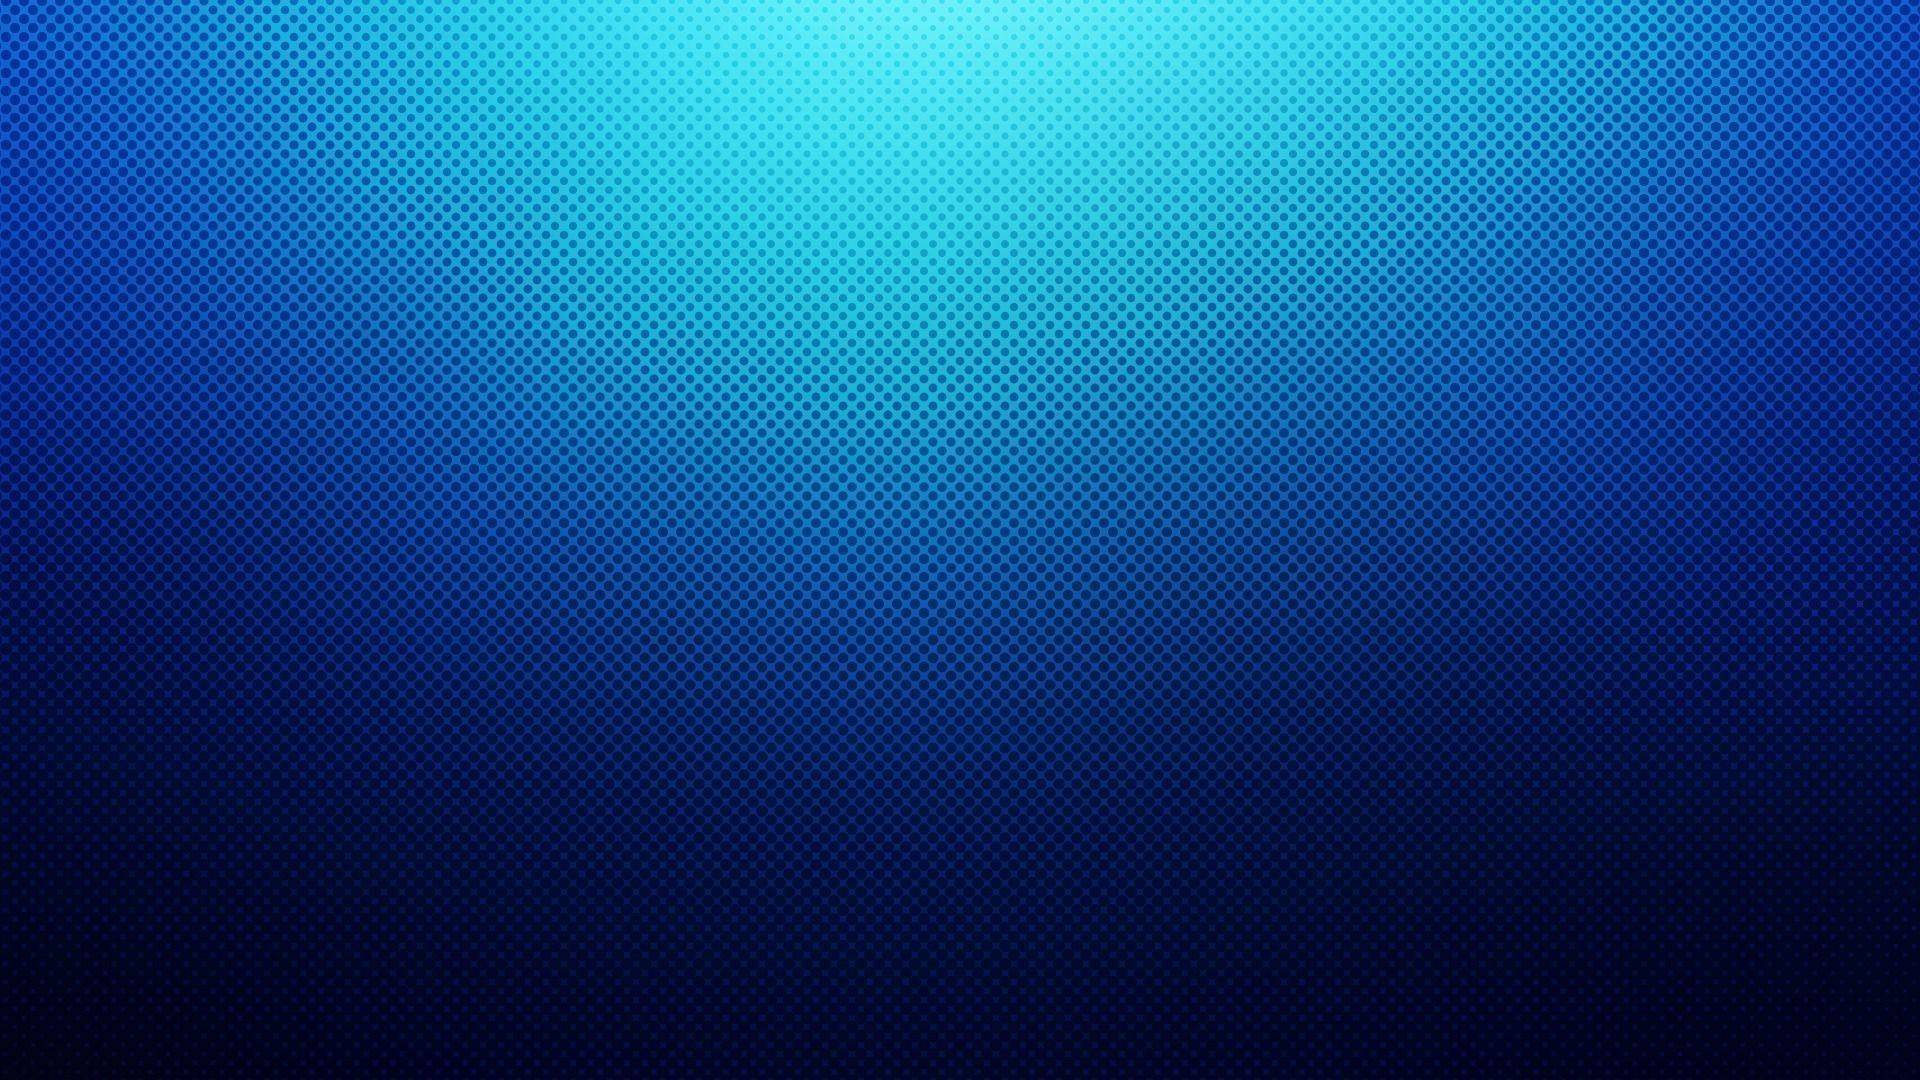 1920x1080 Blue-Gradient-Background-HD-Wallpaper | GSEII: VISION 20/